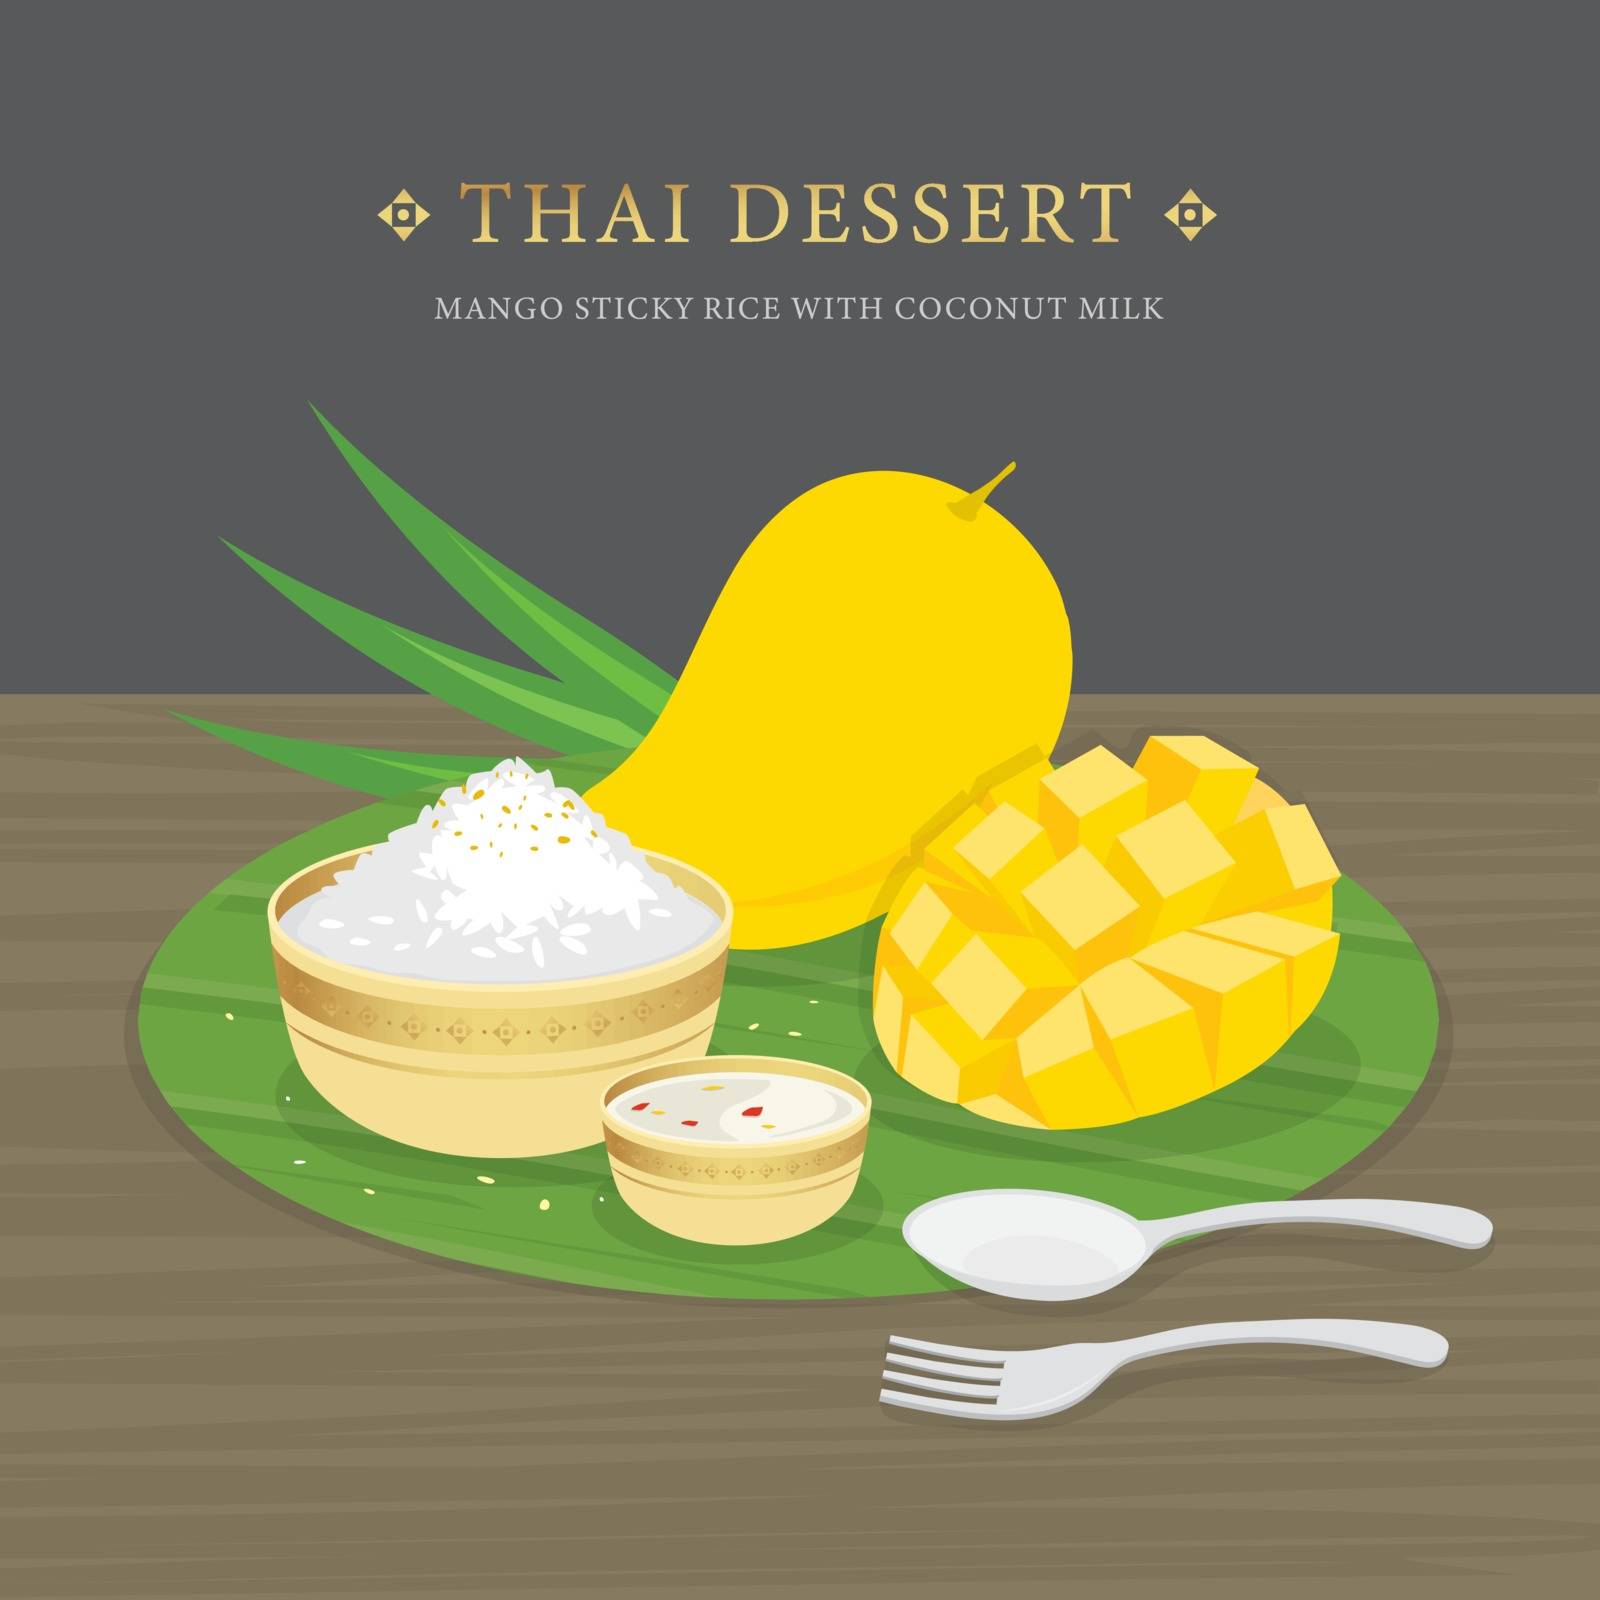 Thai Dessert, Mango and sticky rice with coconut milk and mango sauce. Cartoon Vector illustration